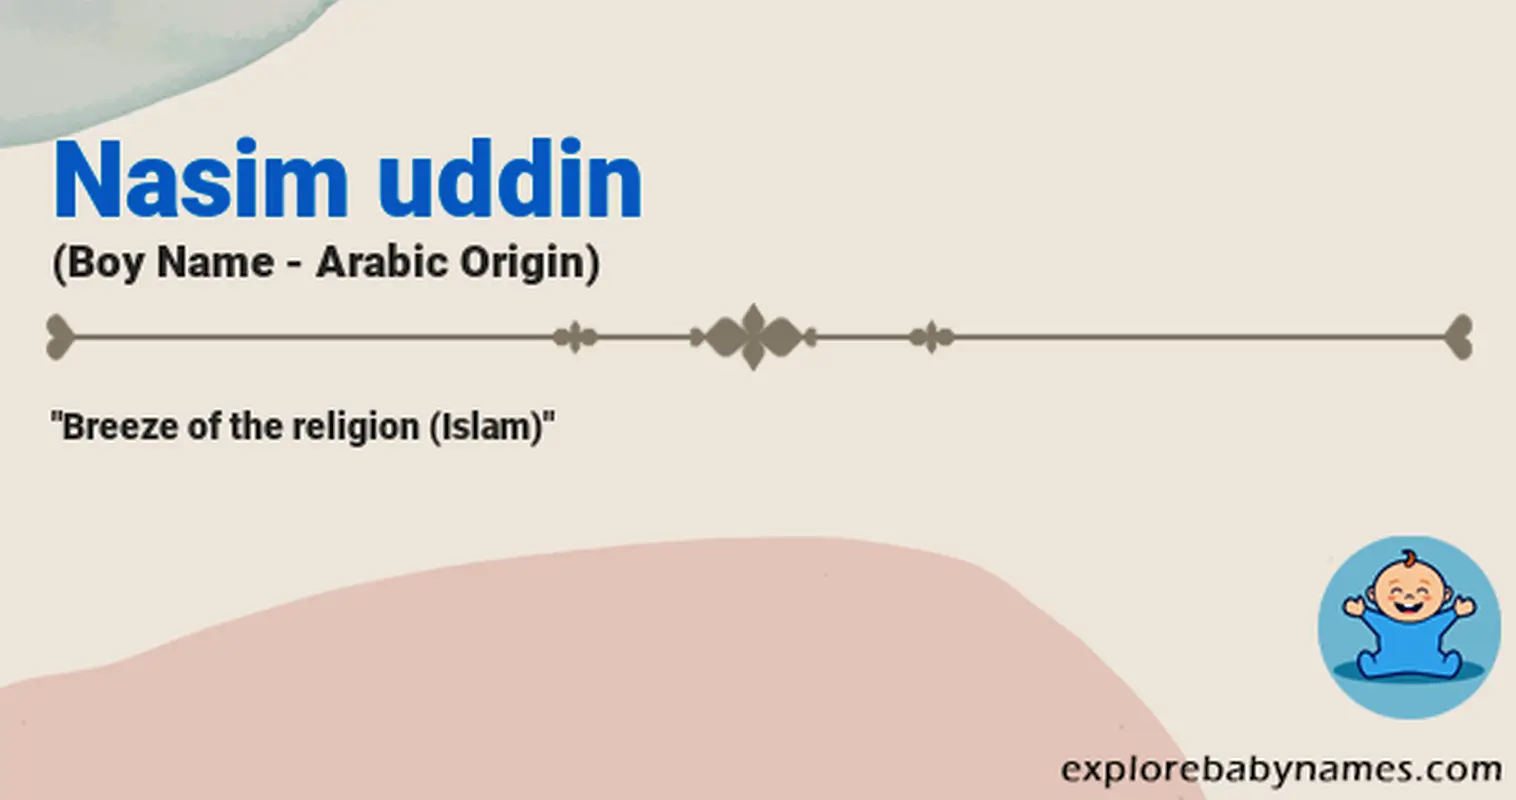 Meaning of Nasim uddin